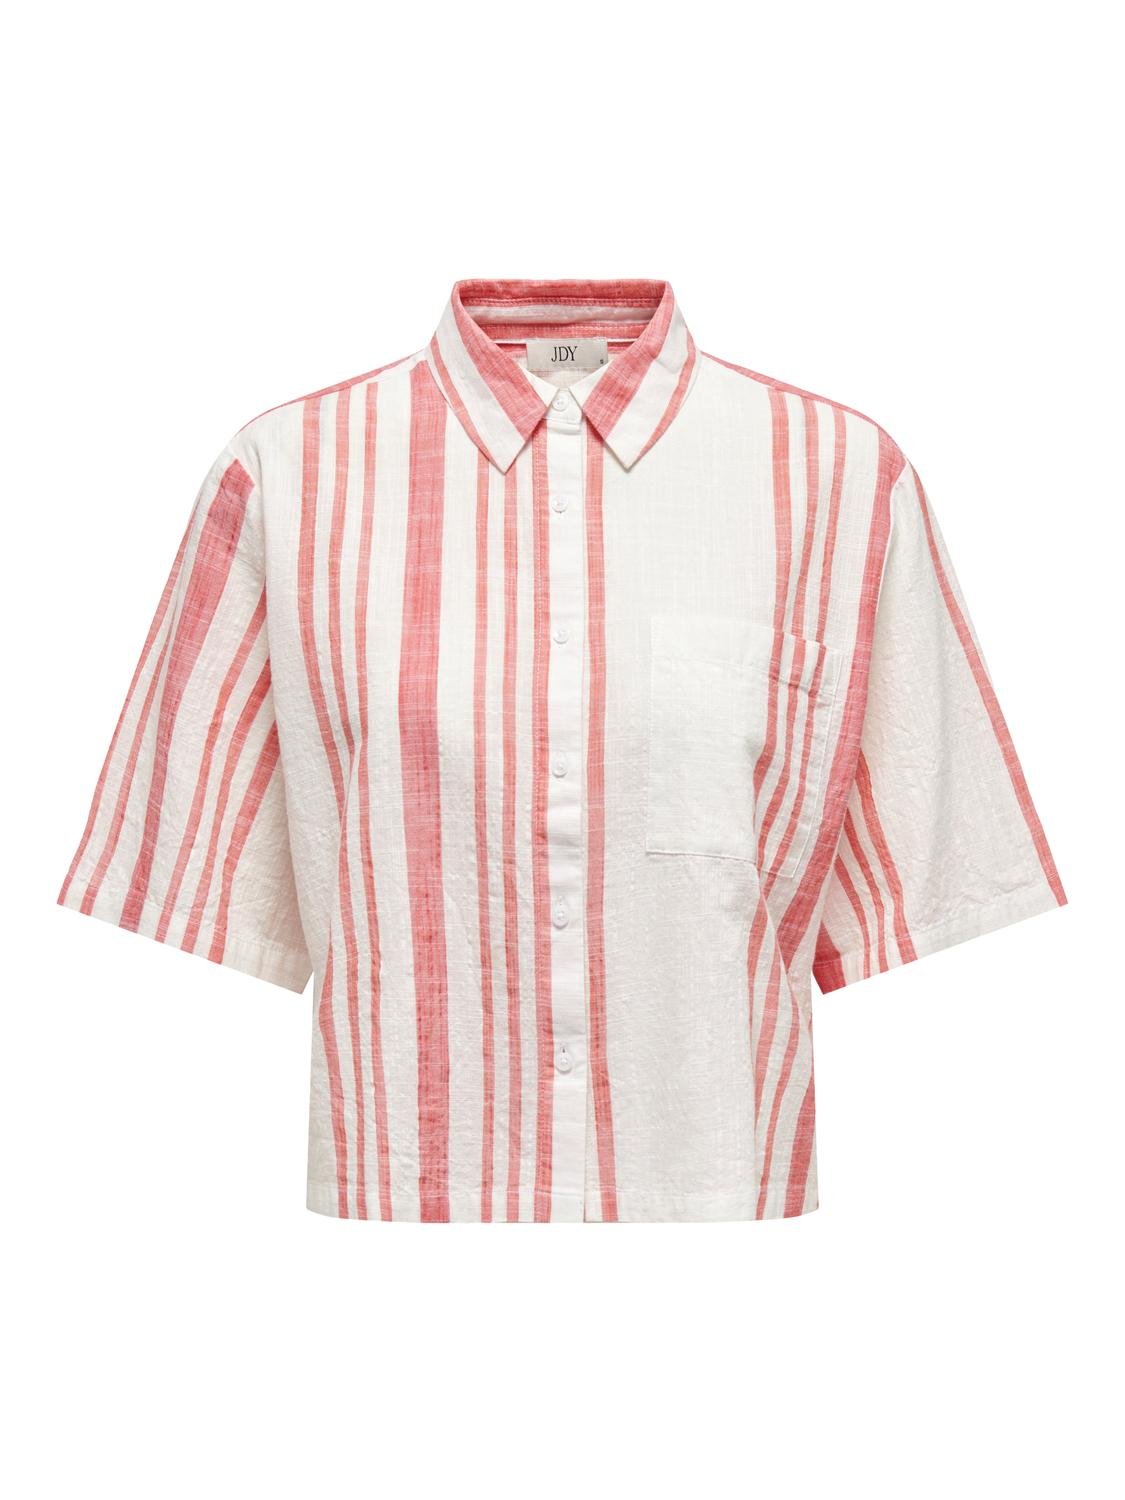 Dorthea hemd stripe shell pink  - JDY